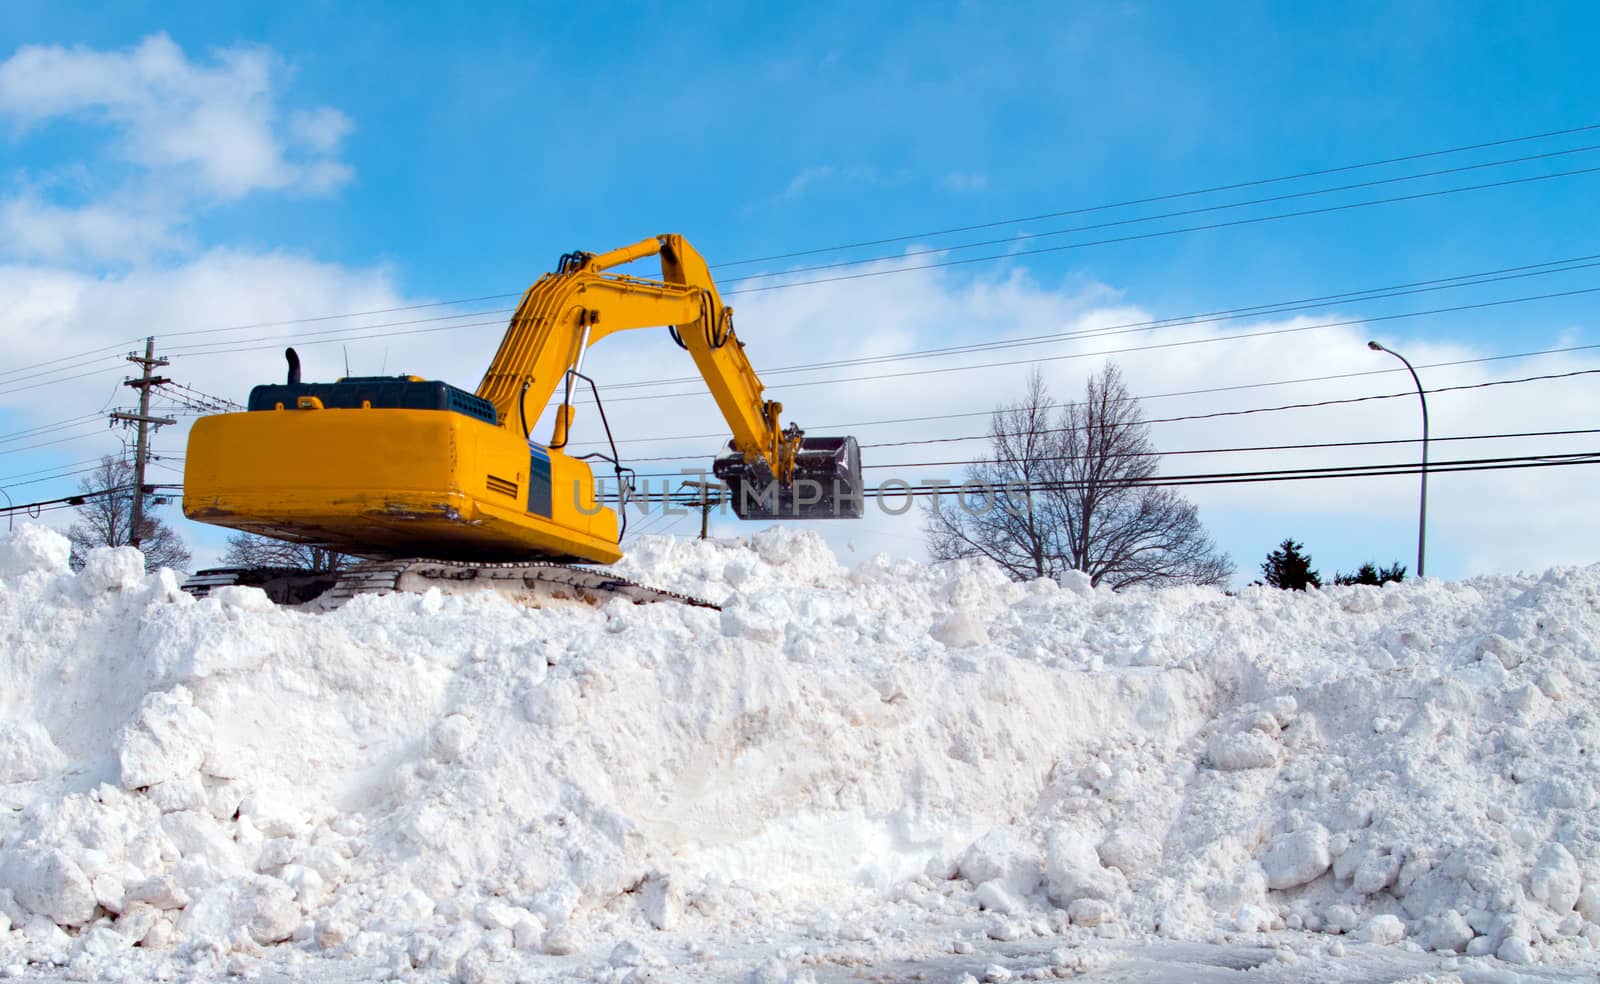 Excavator clearing snow by edcorey